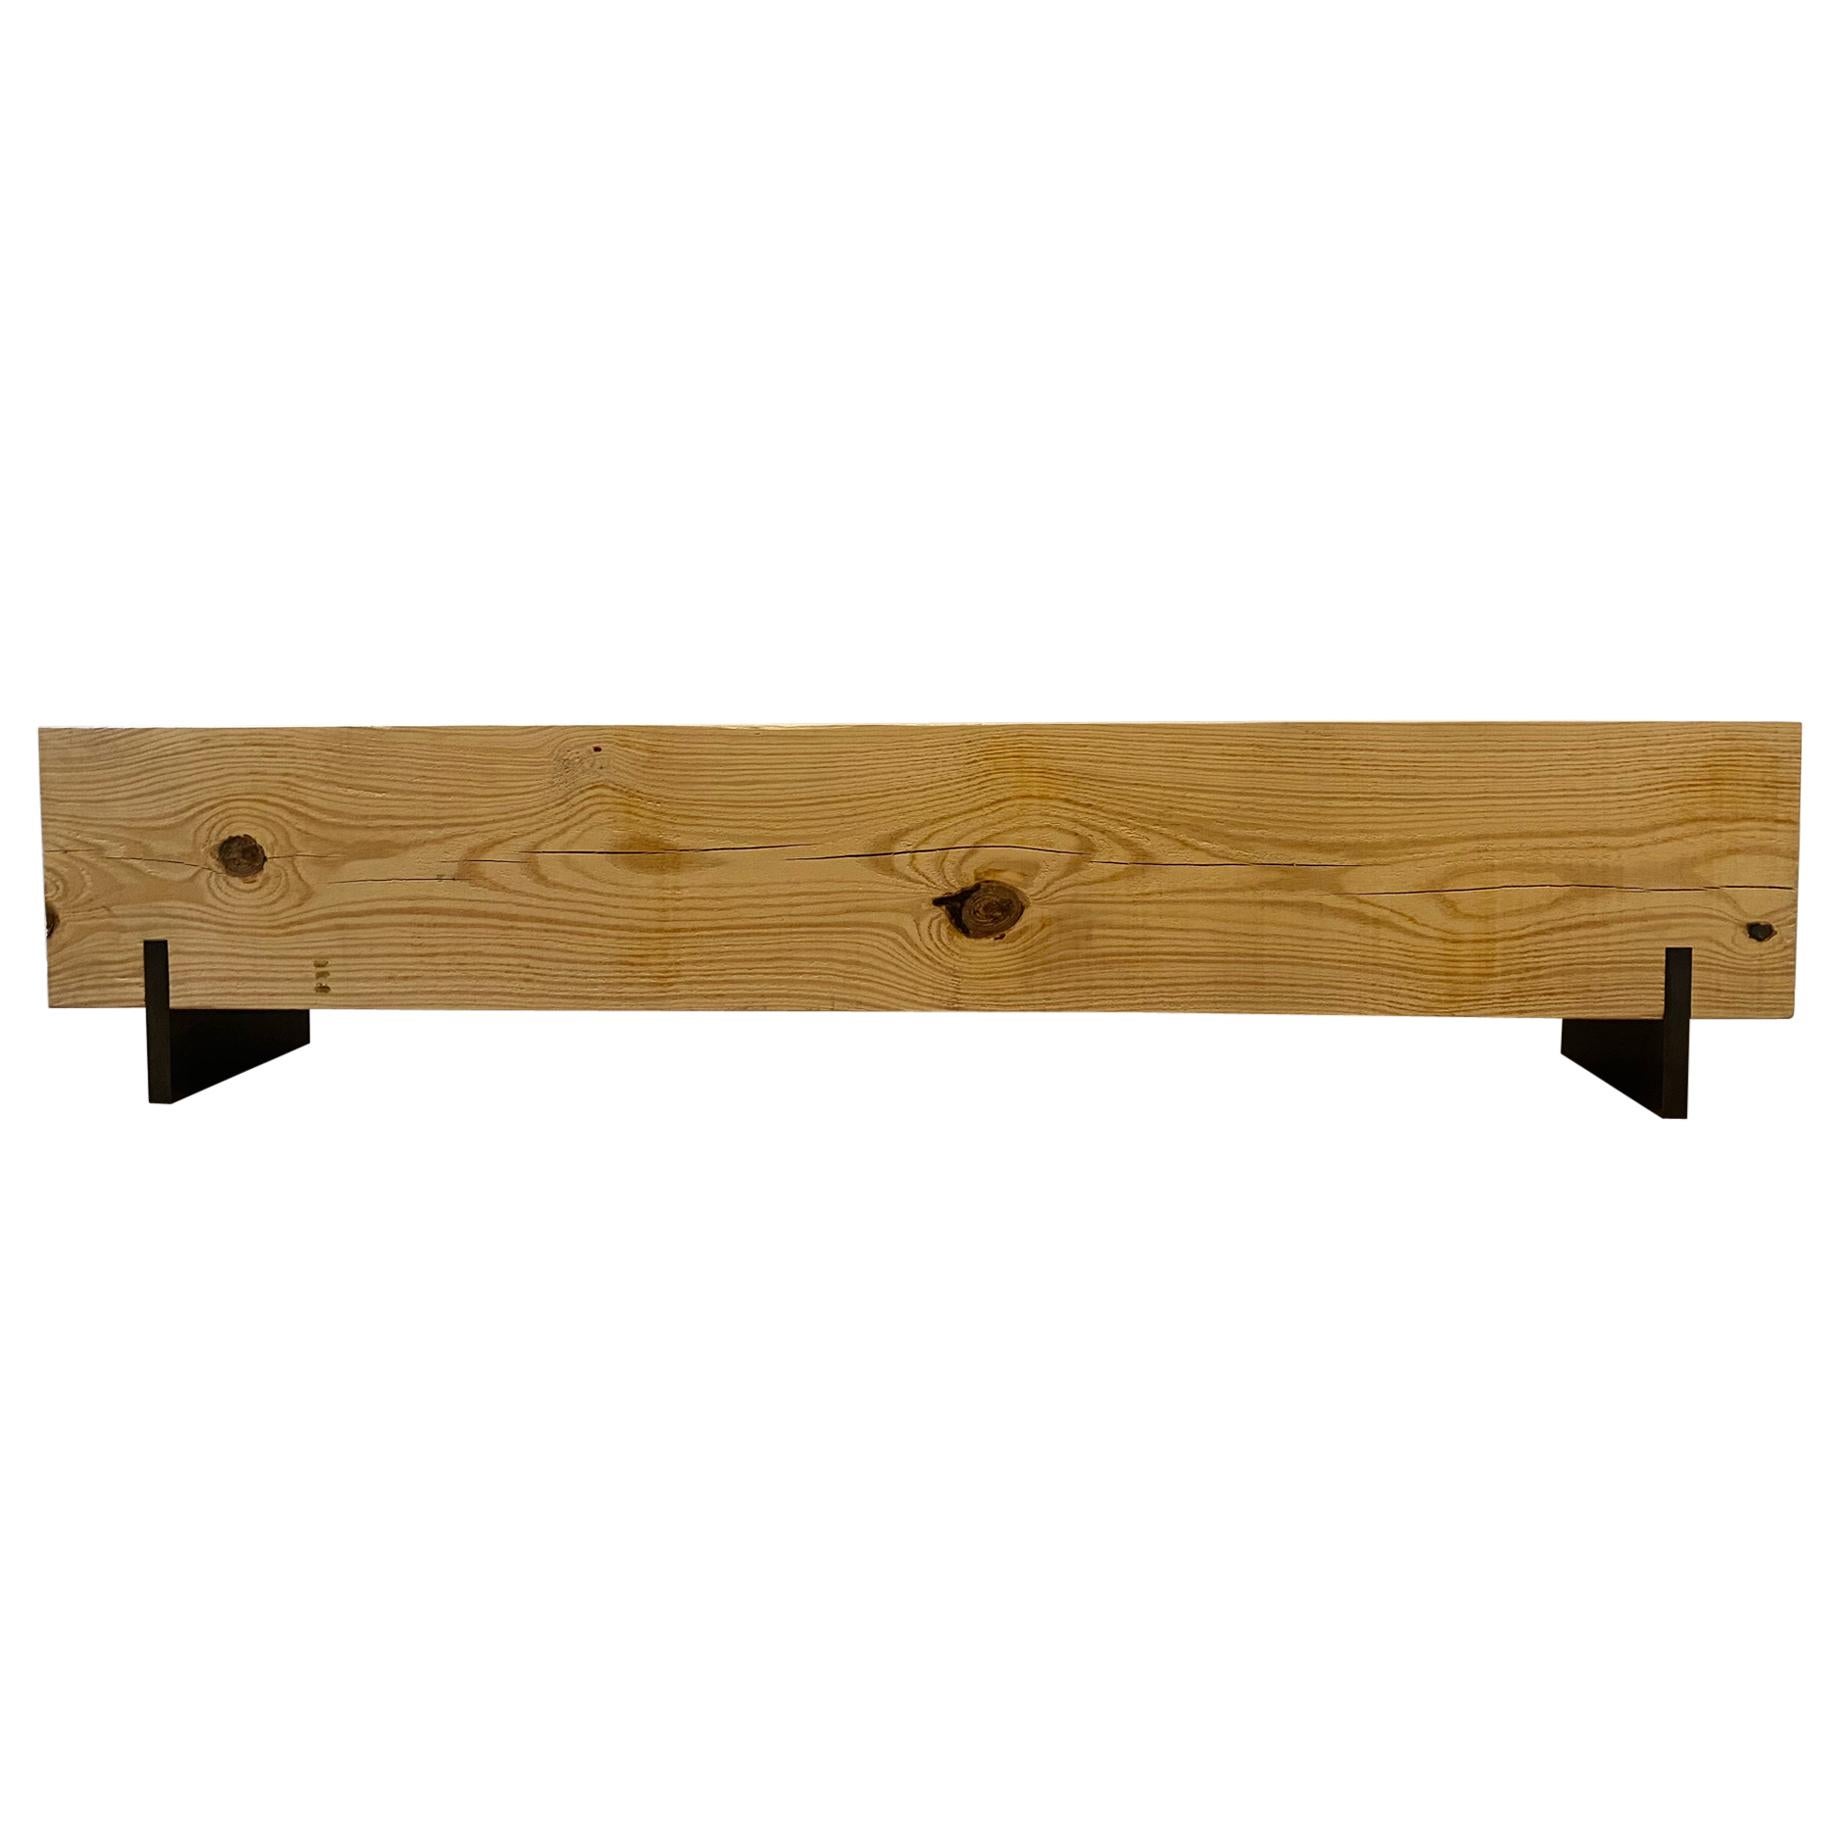 Rustic Indoor / Outdoor Large Reclaimed Wood Bench Pine and Steel